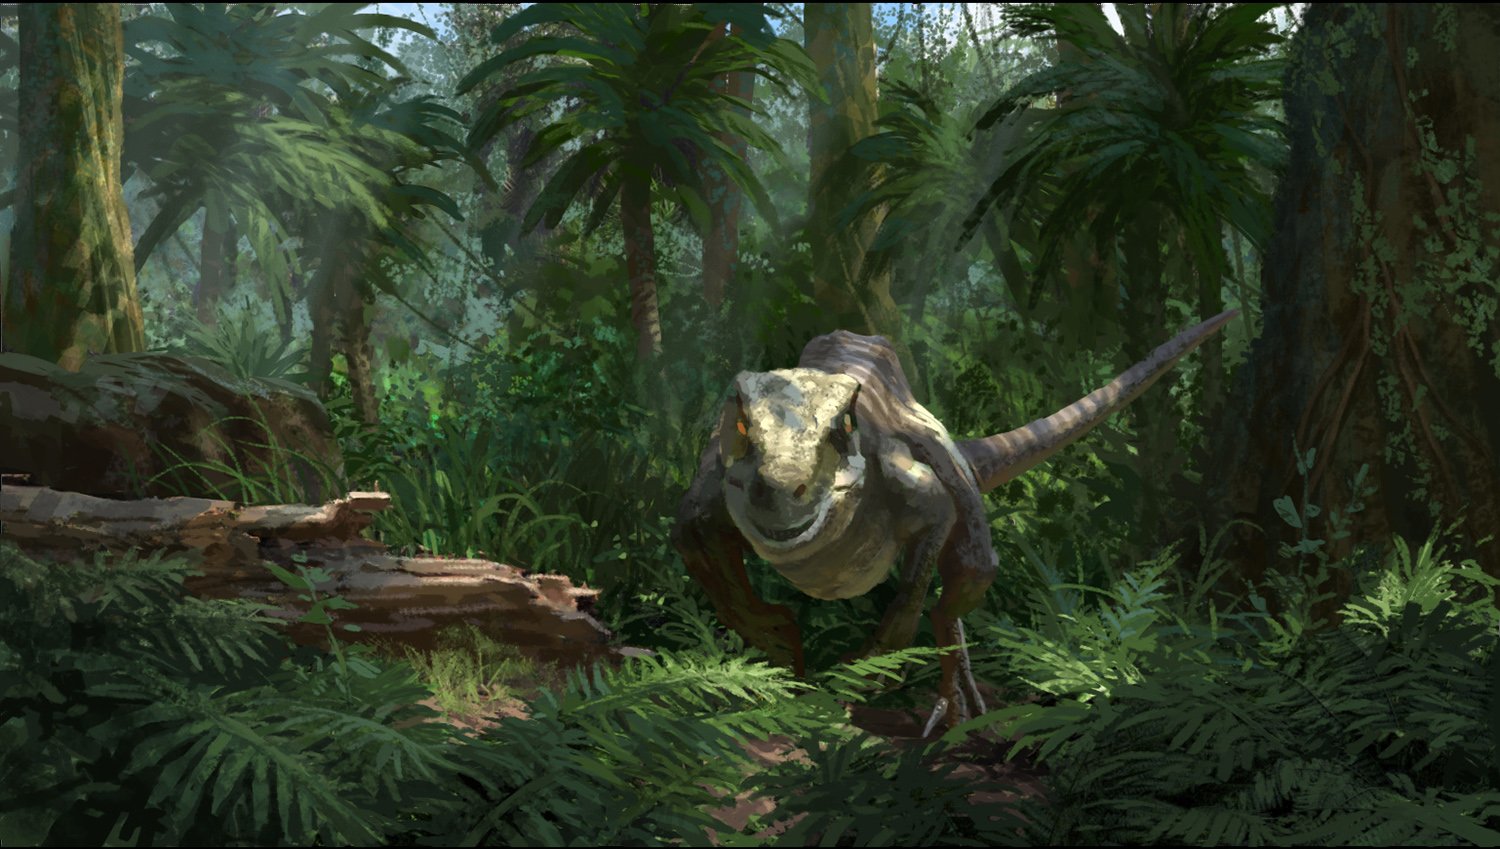 Jurassic World: Camp Cretaceous